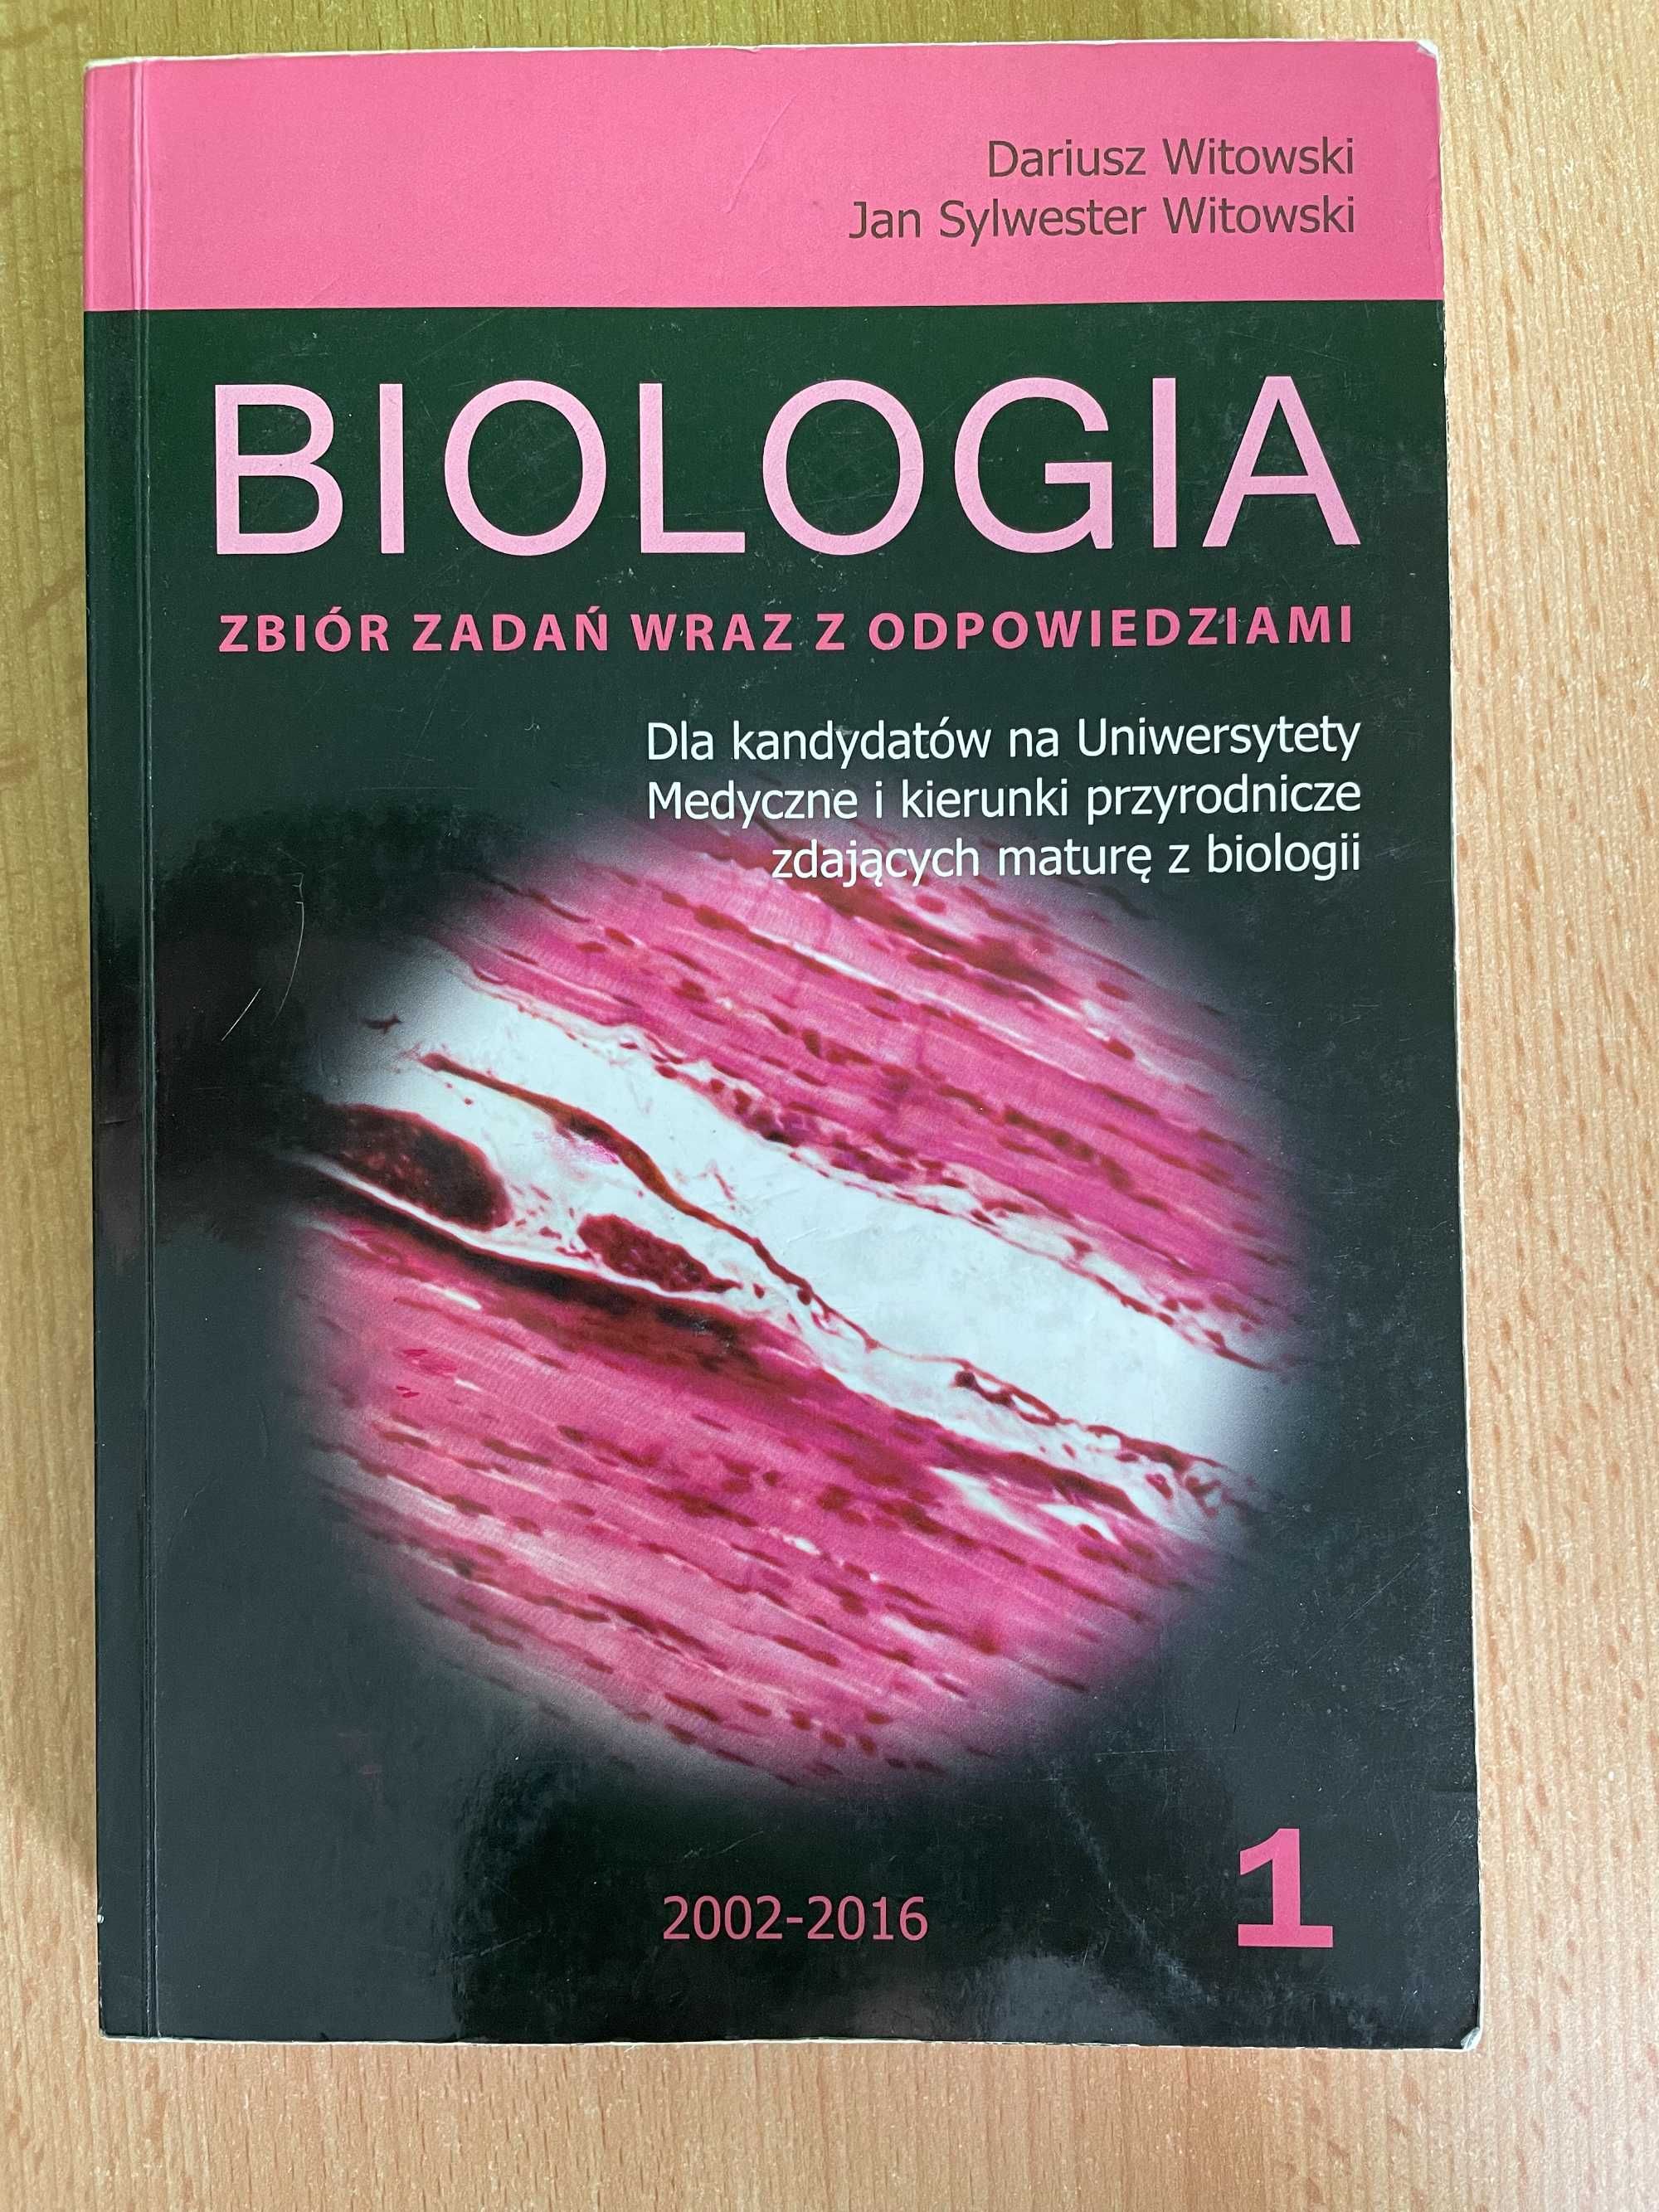 biologia dariusz witowski jan sylwester witowski